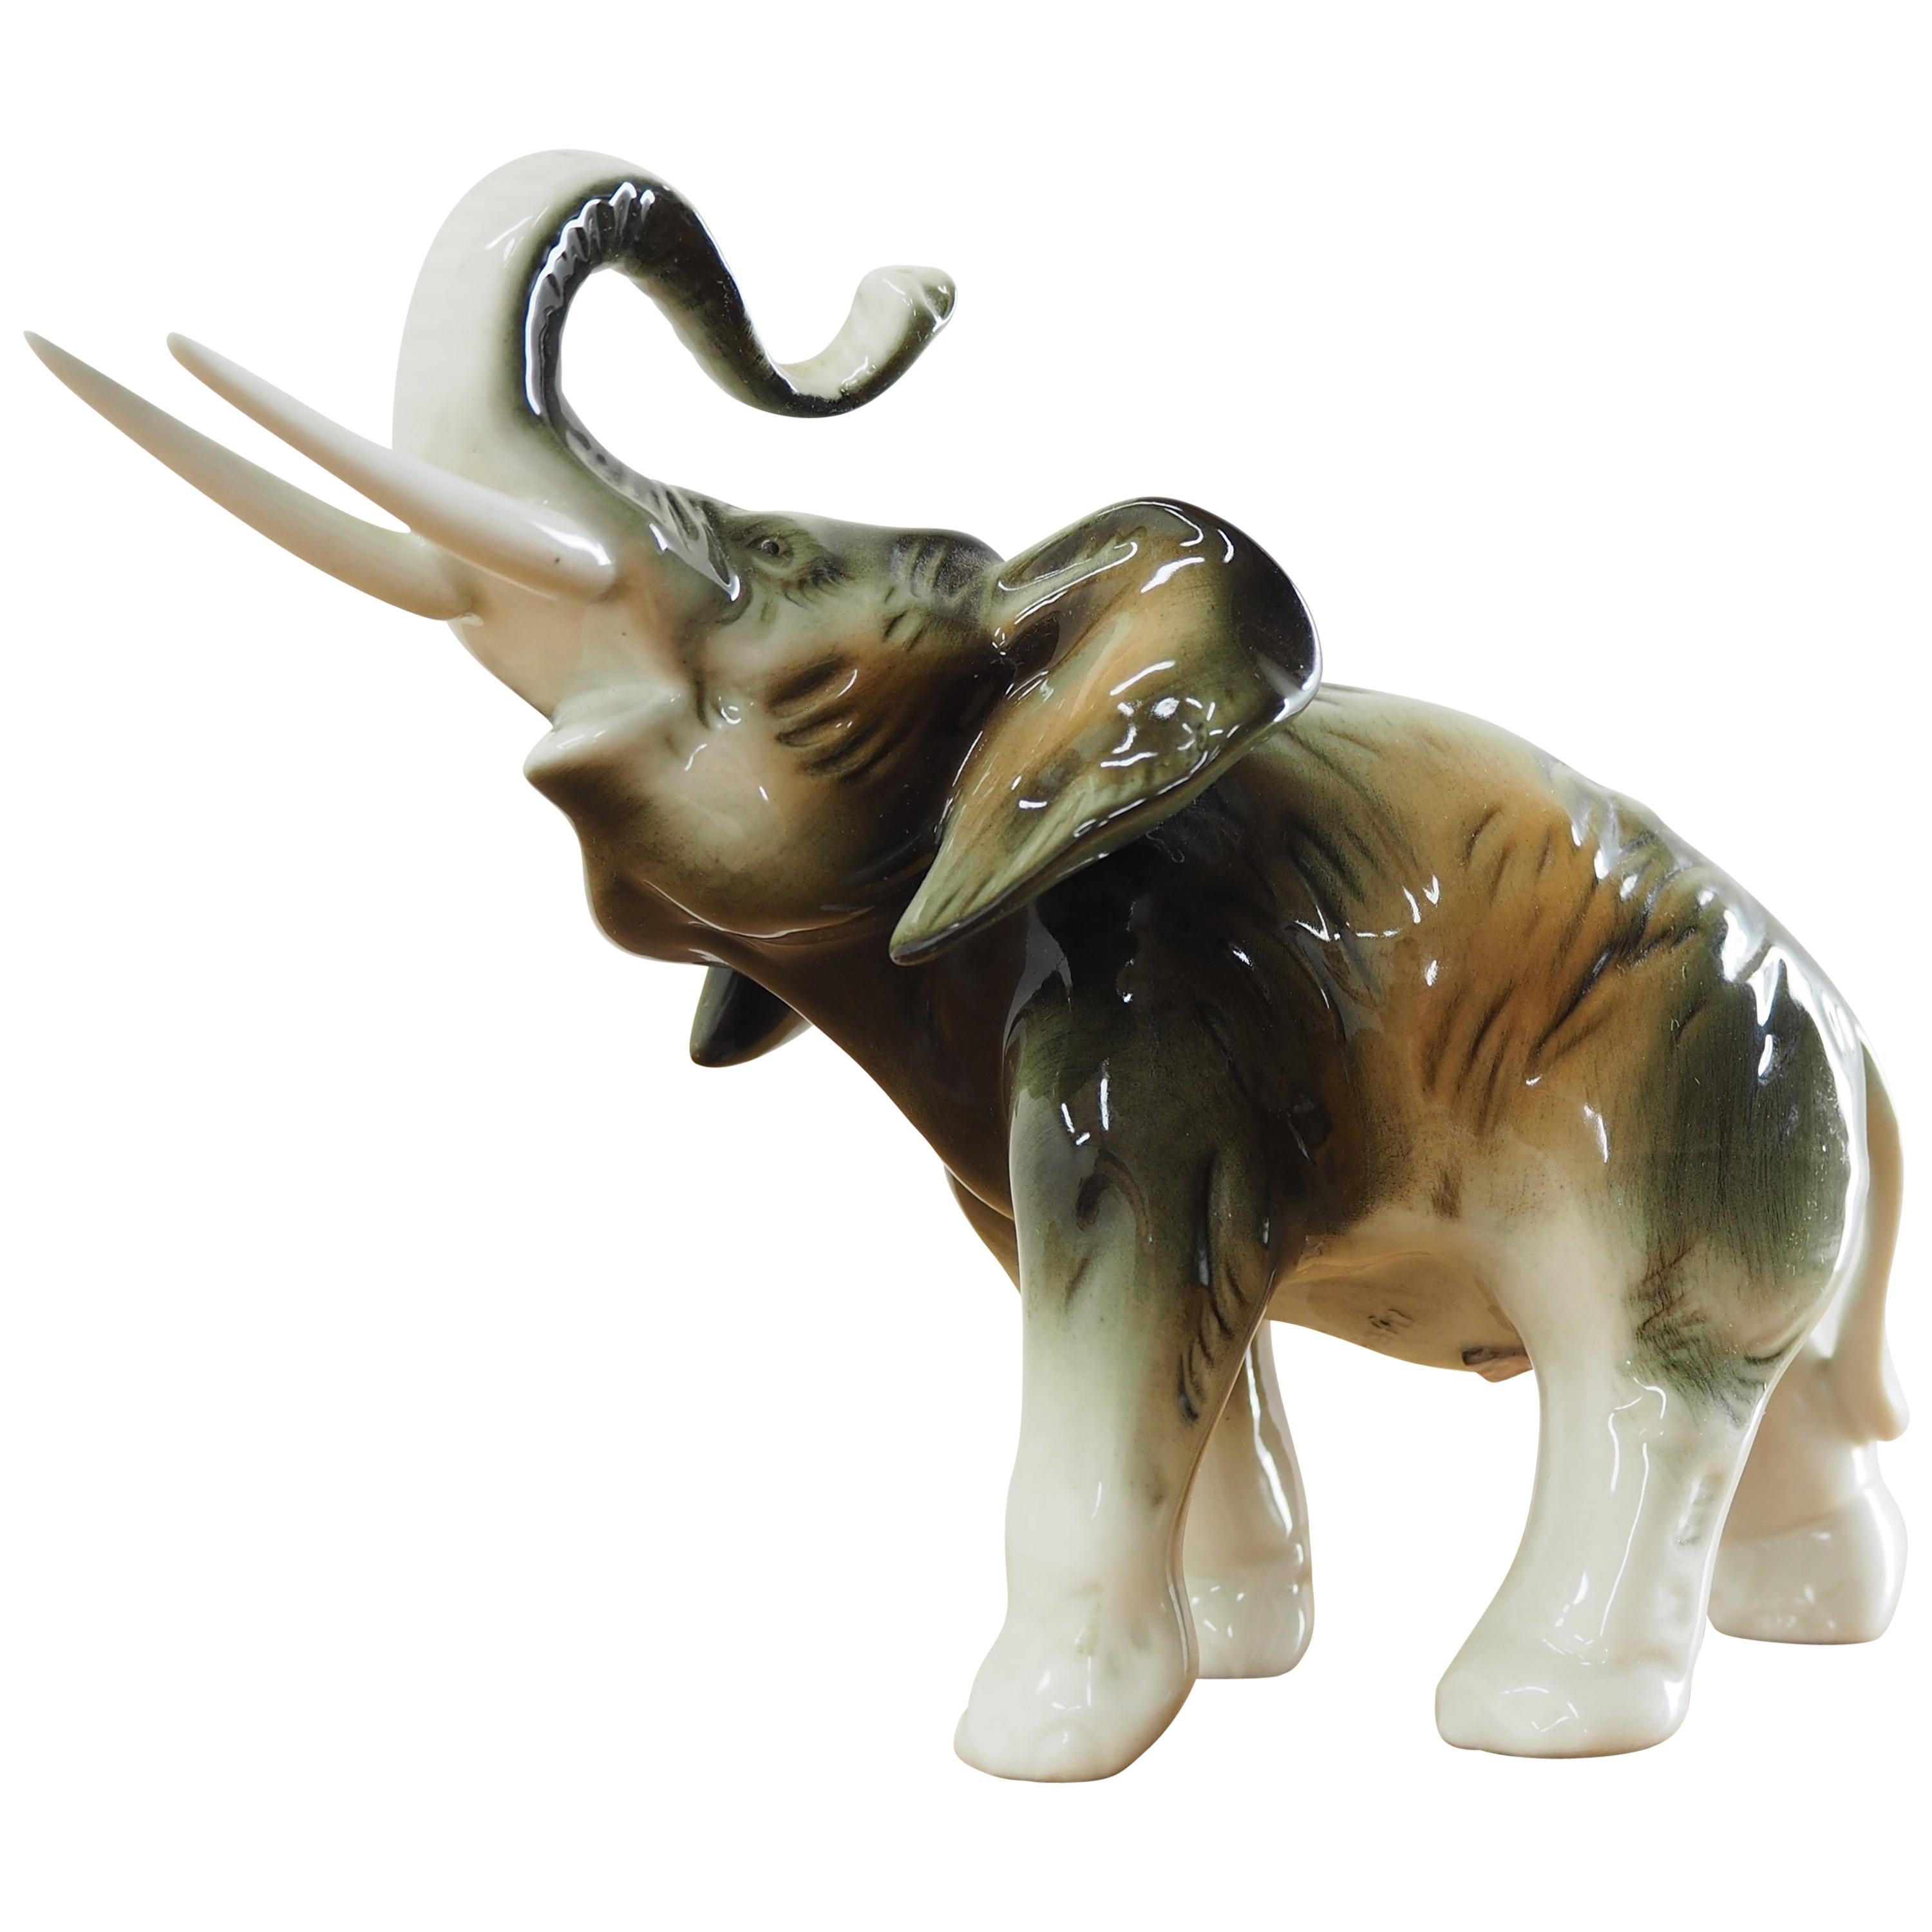 Midcentury Porcelain Sculpture of Elephant from Royal Dux, 1960s